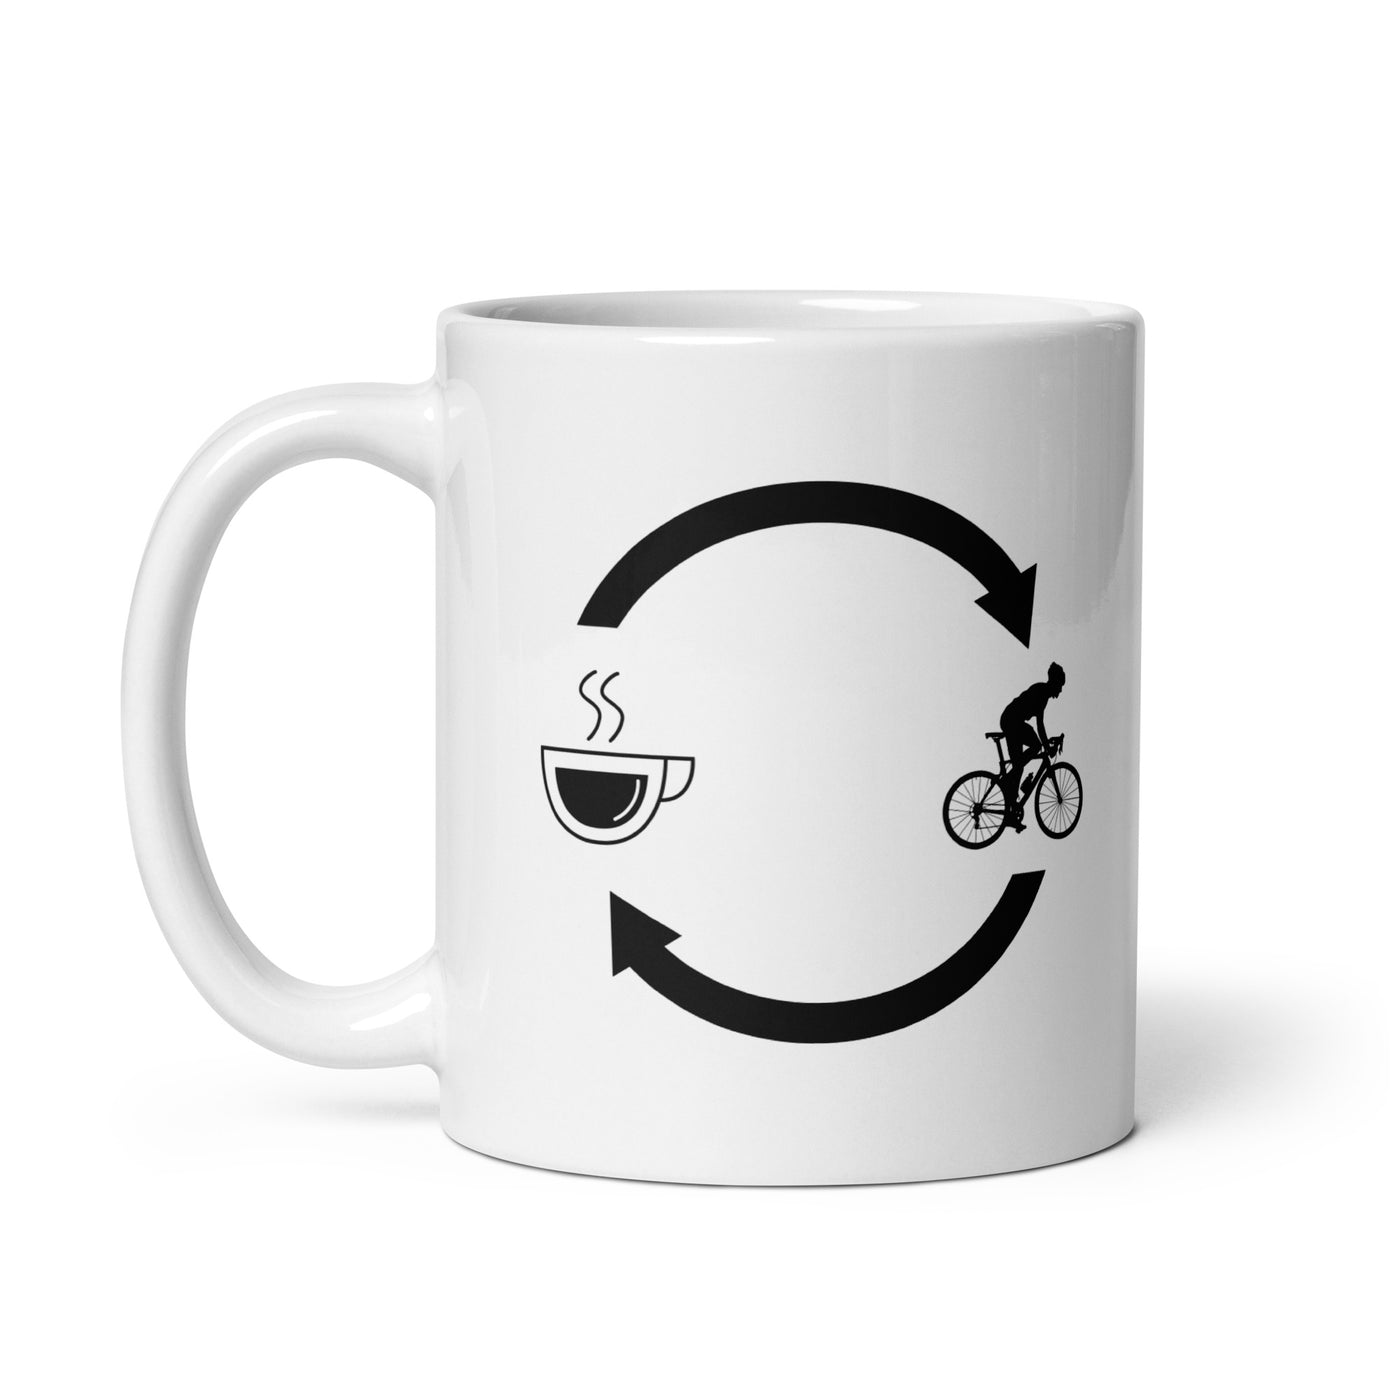 Coffee Loading Arrows And Cycling 1 - Tasse fahrrad 11oz